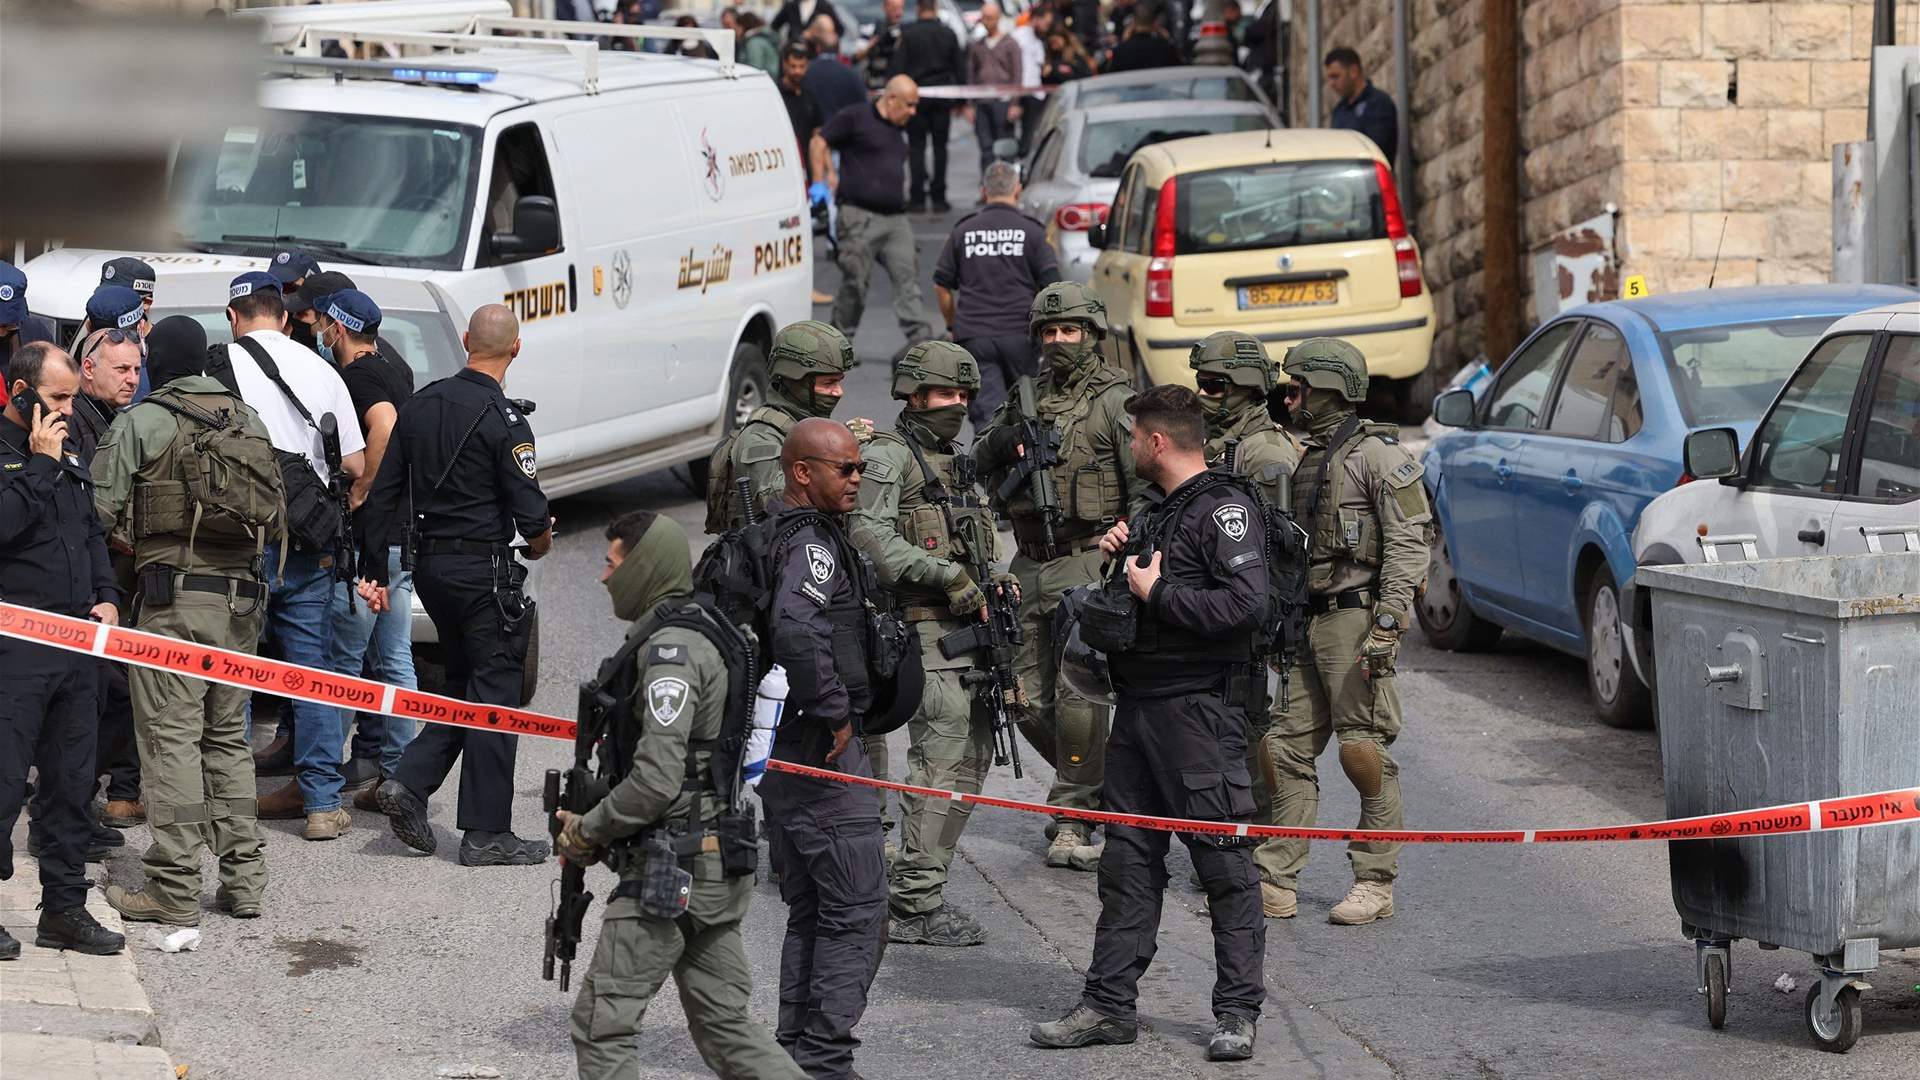 Hamas claims Jerusalem shooting that killed three, calls for ‘escalation’